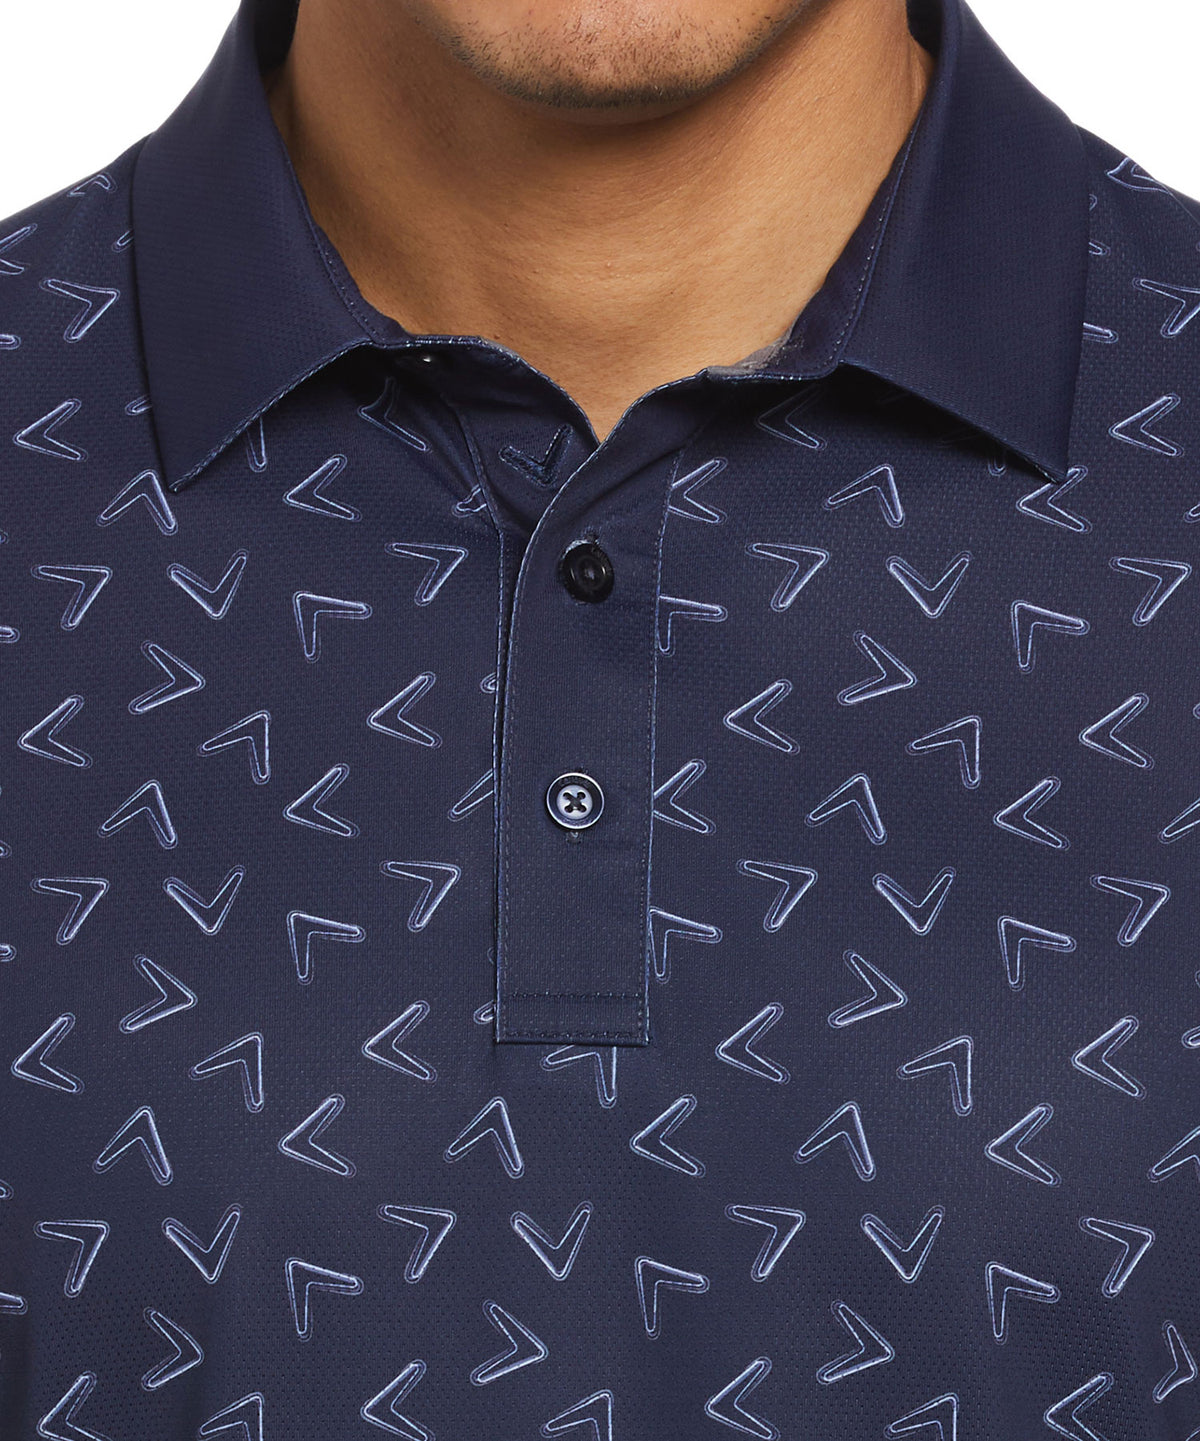 Callaway Short Sleeve Chevron Print Polo Knit Shirt, Men's Big & Tall